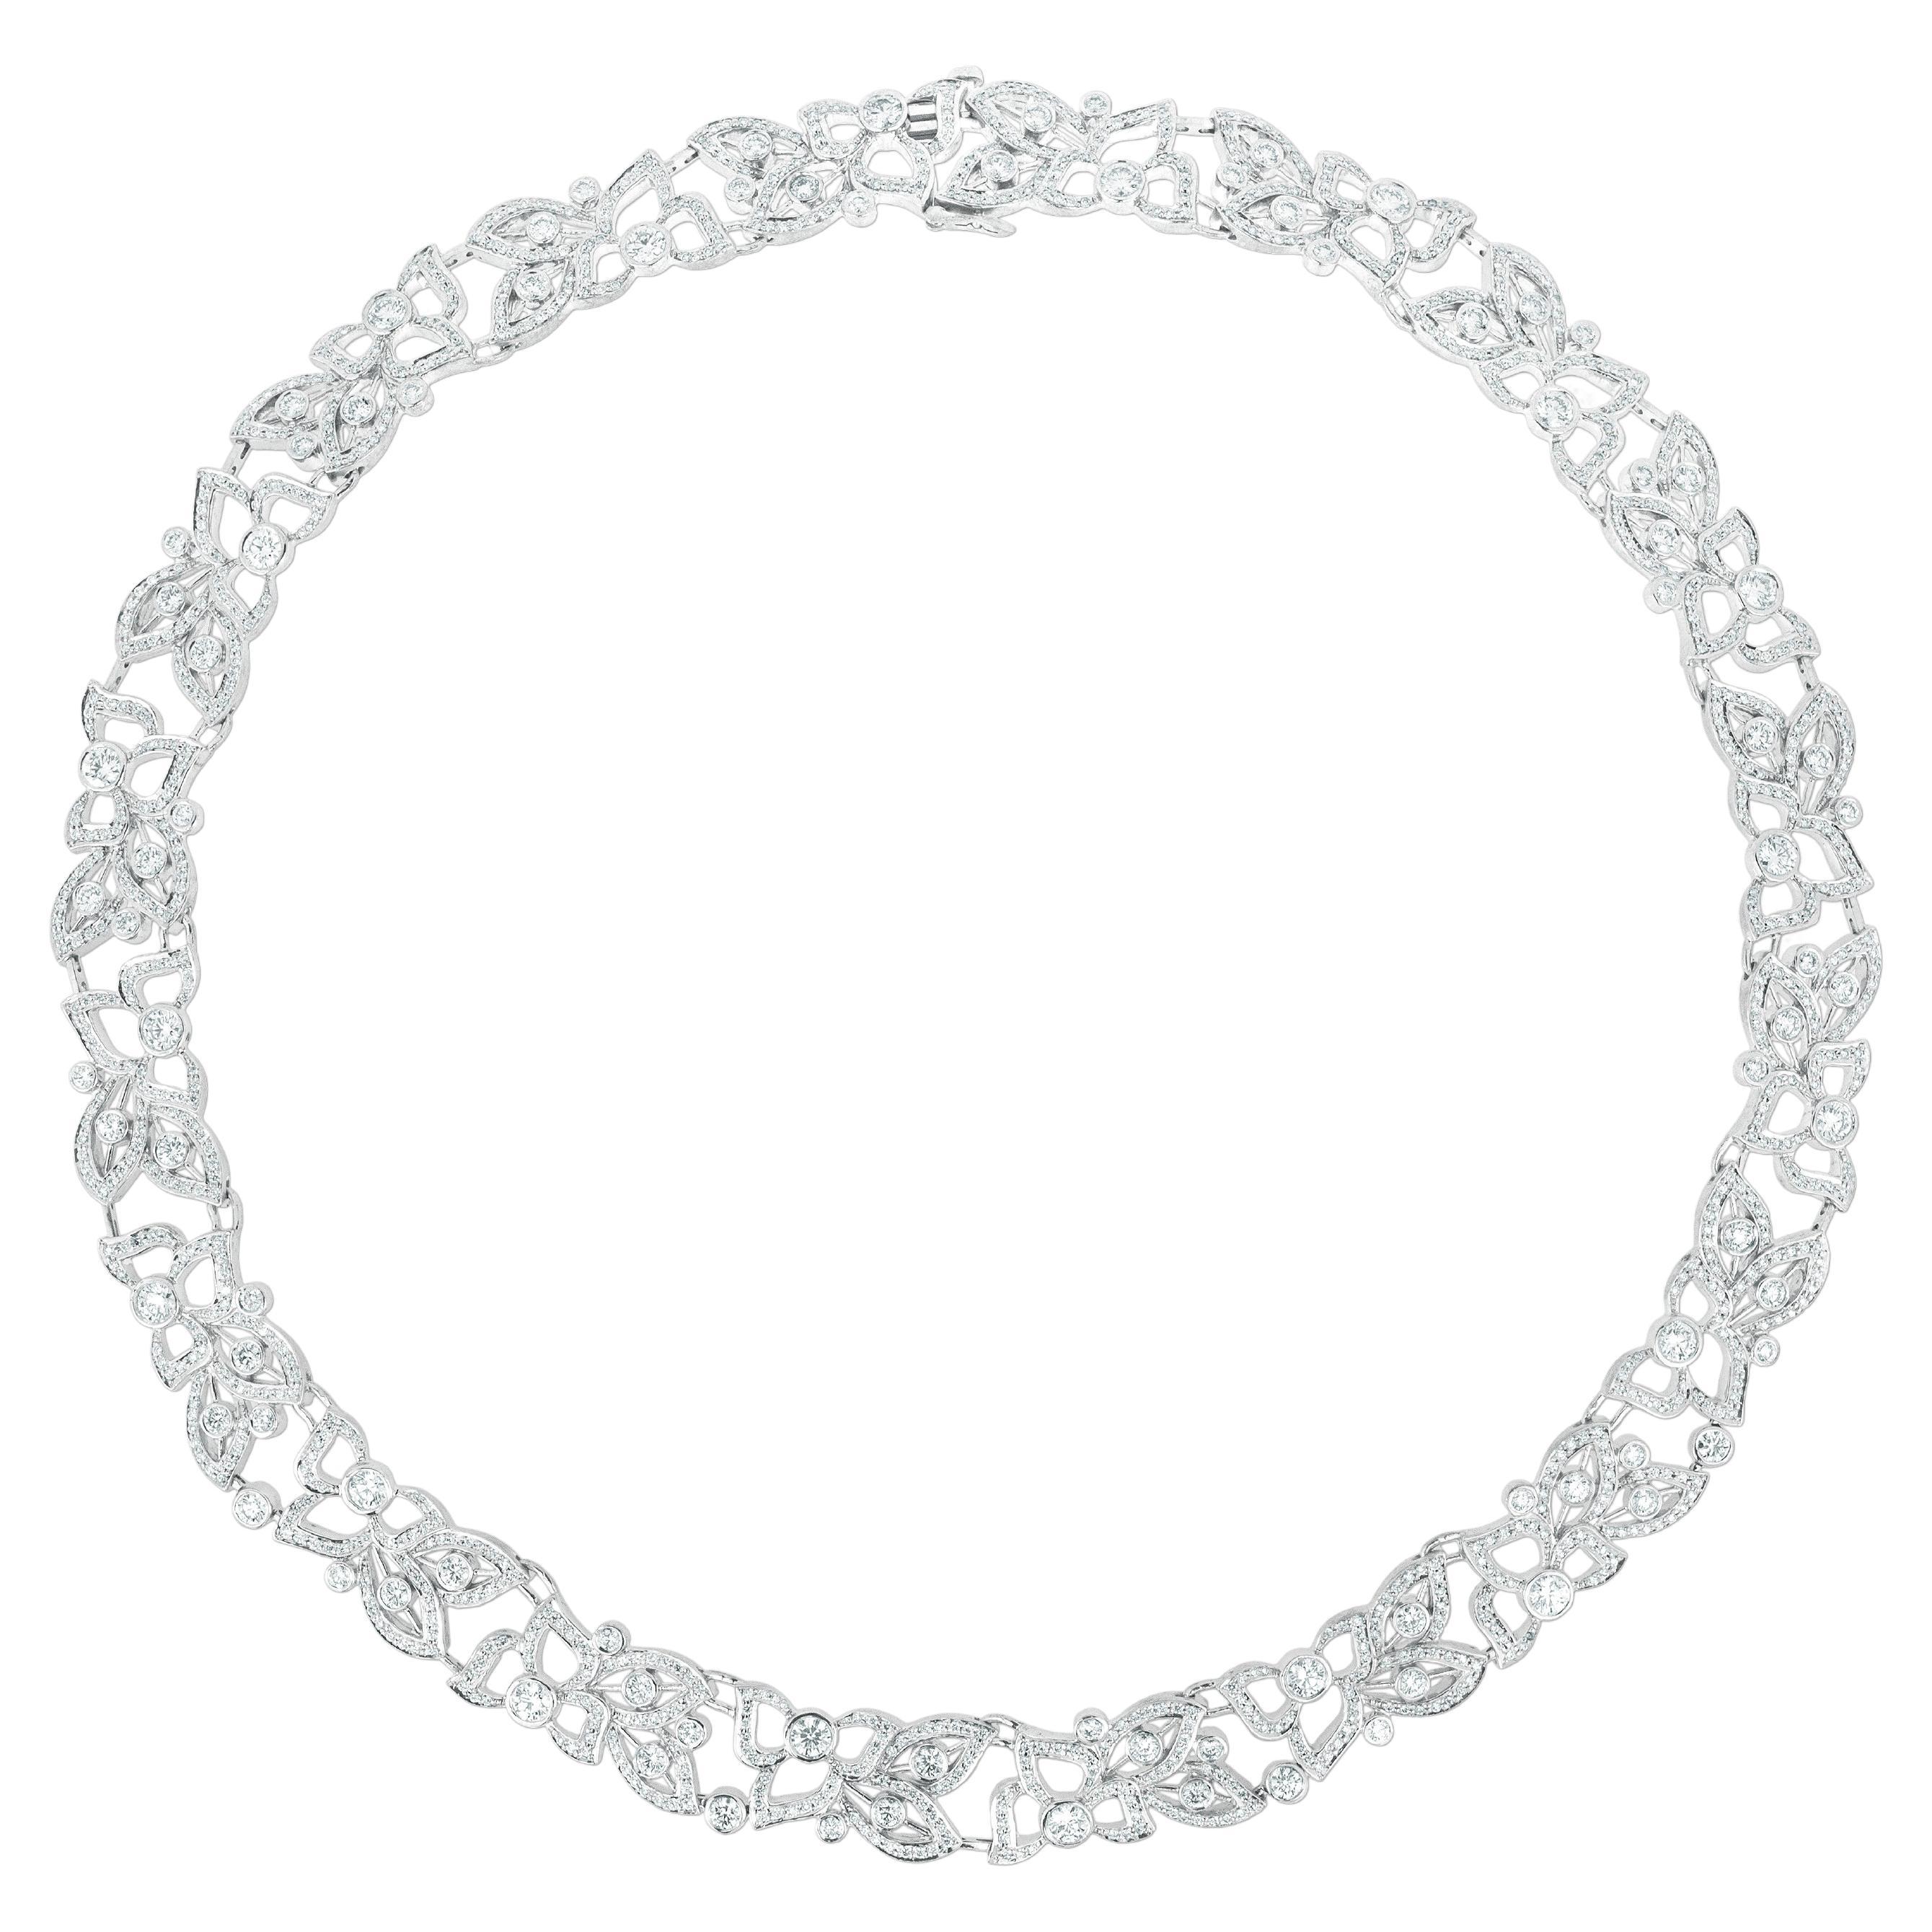 Carelle Florette Pave Diamond Wreath Necklace